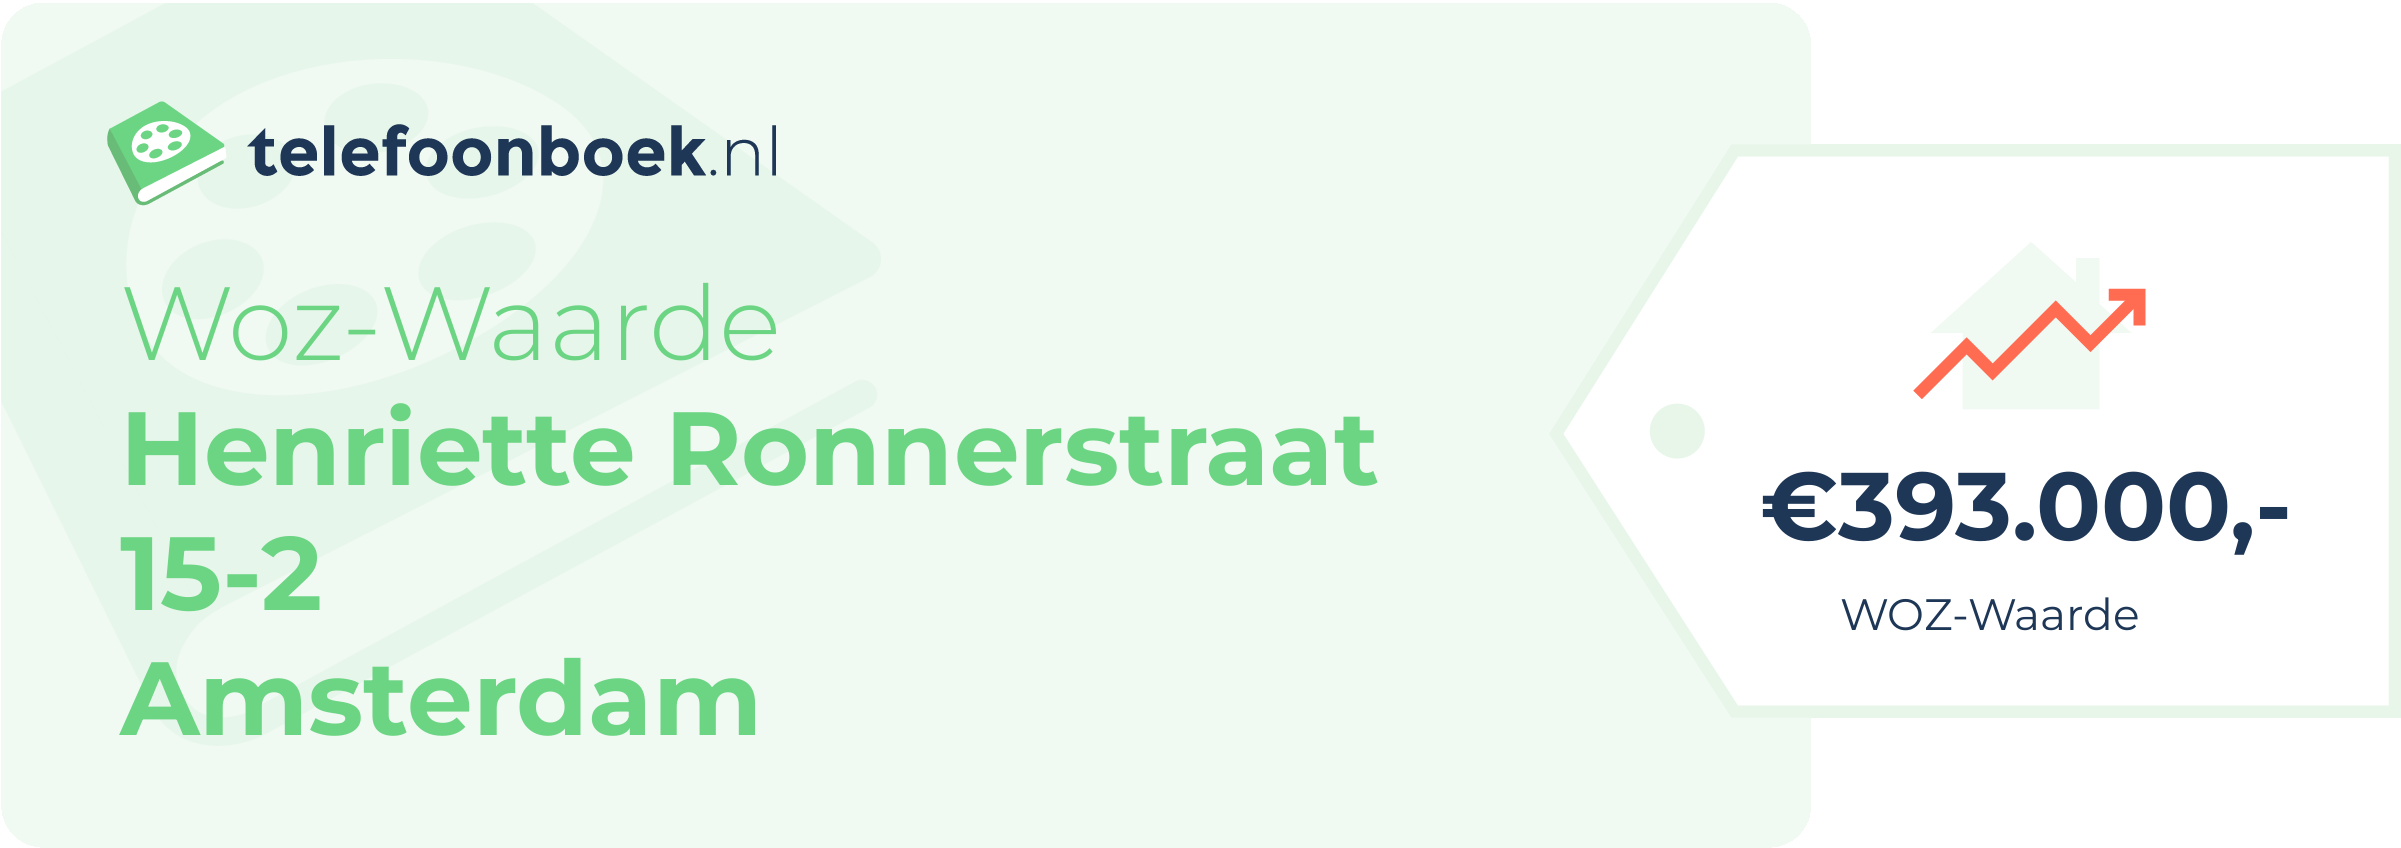 WOZ-waarde Henriette Ronnerstraat 15-2 Amsterdam